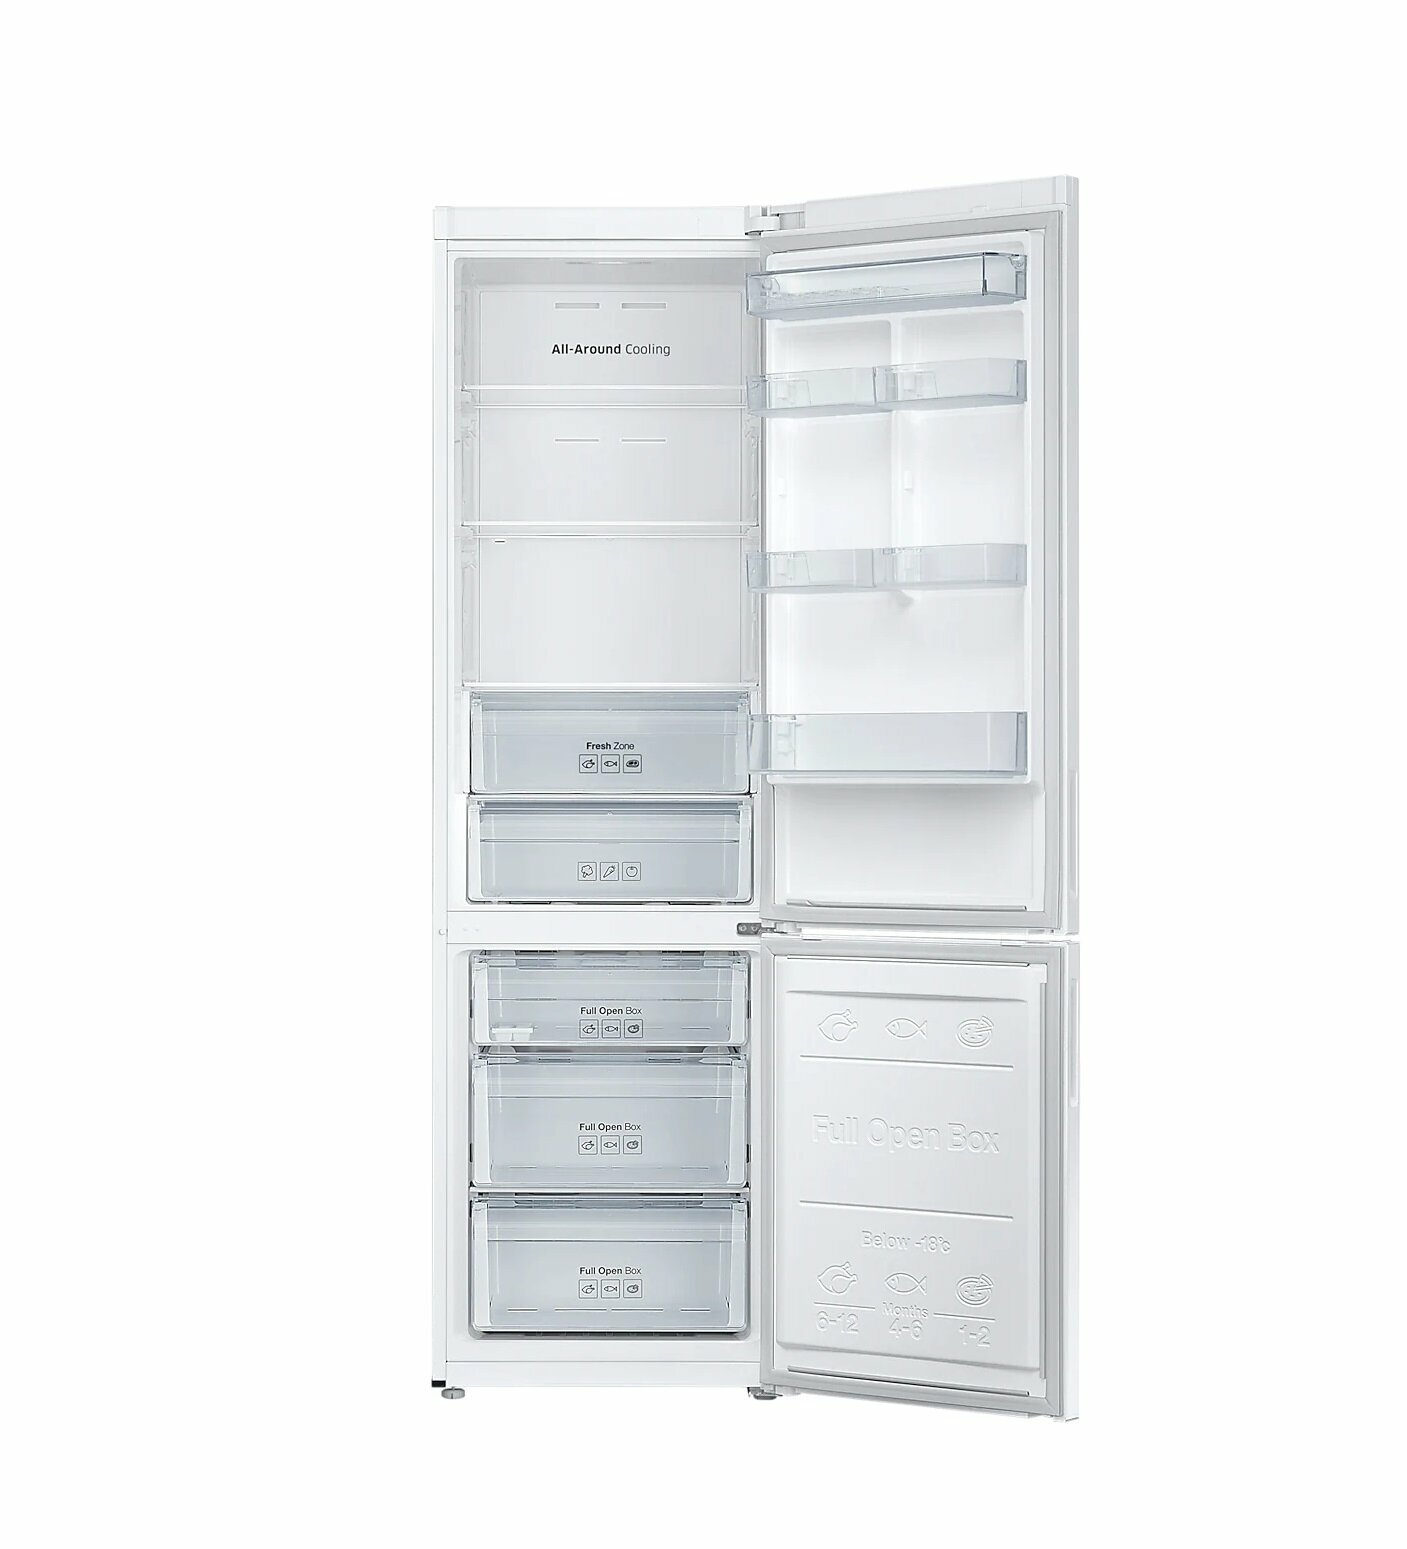 Холодильник Samsung RB37A5200